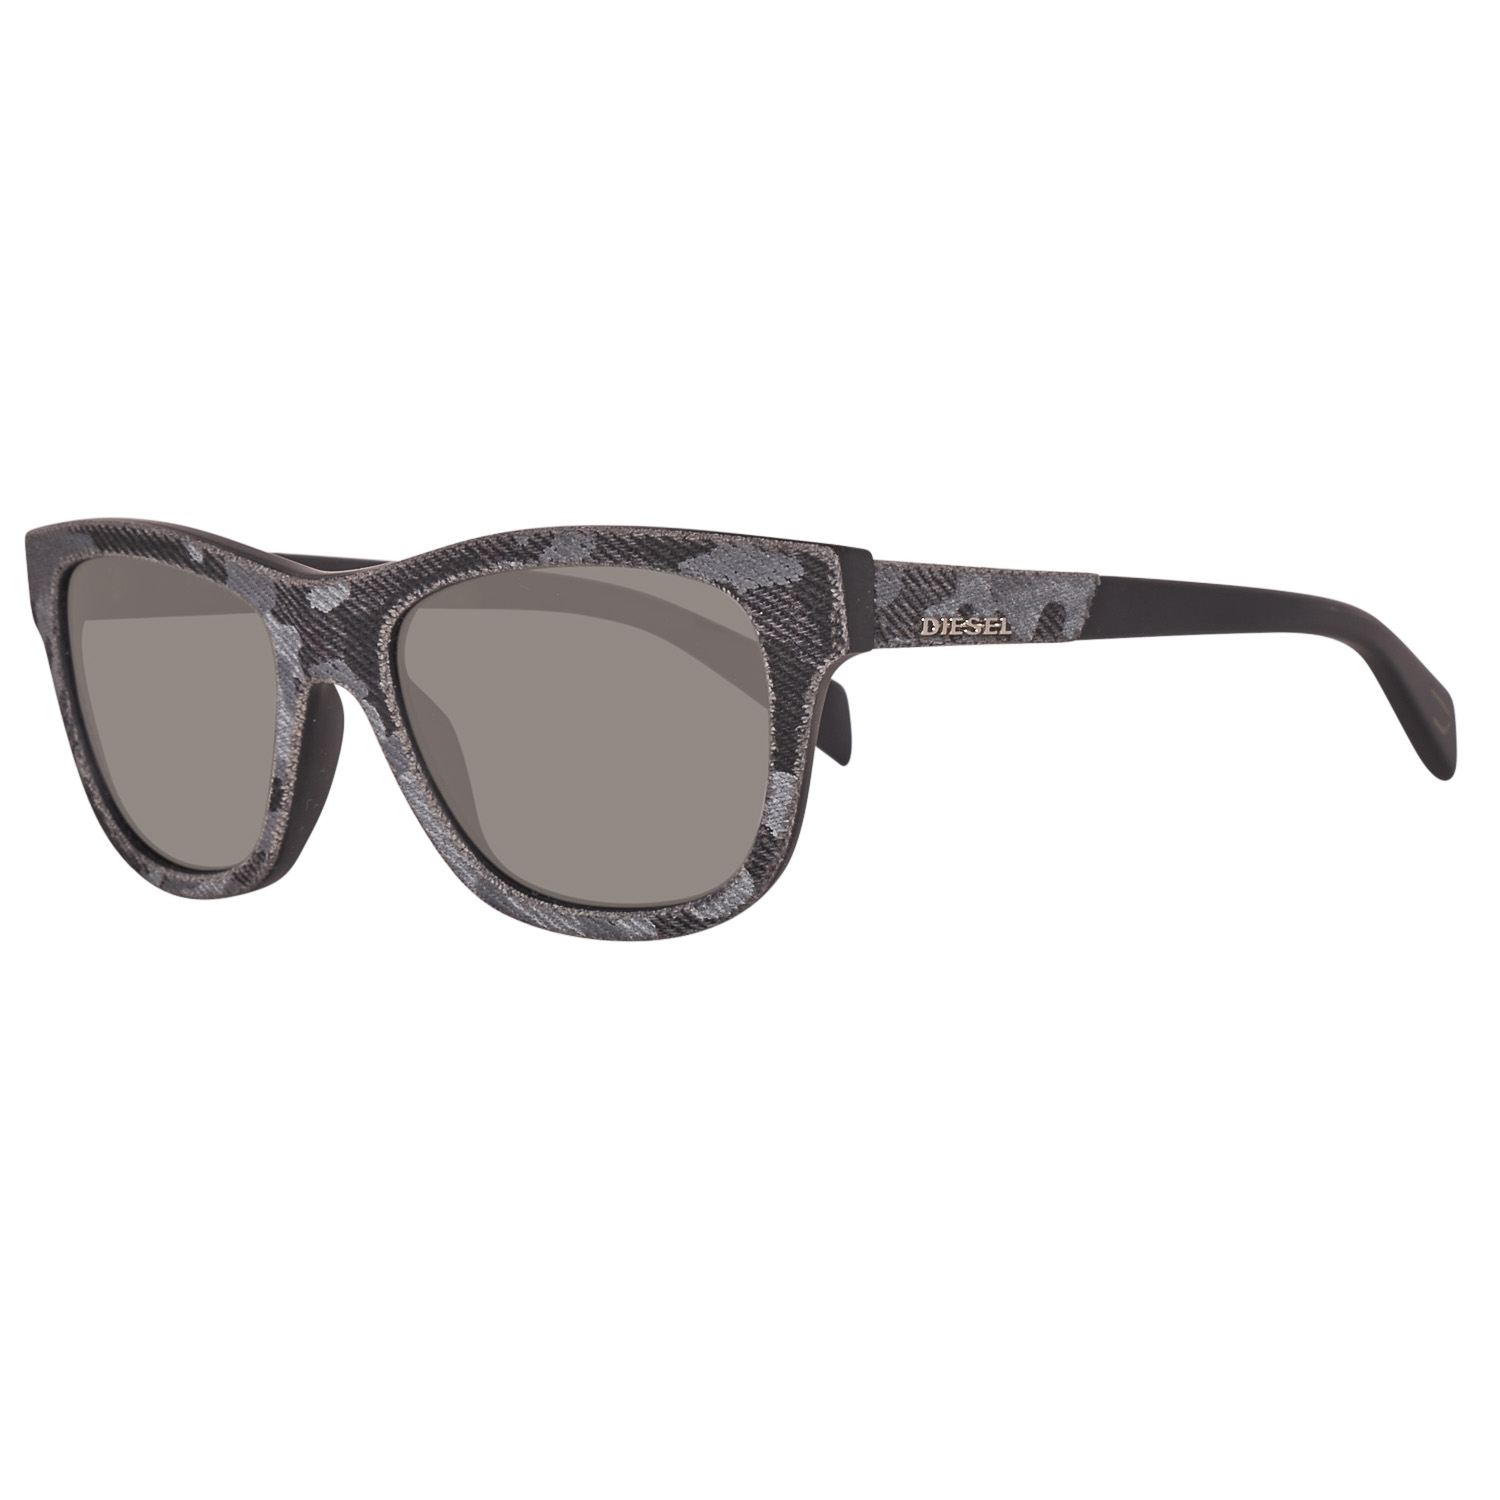 Diesel Sunglasses DL0111 20A 52